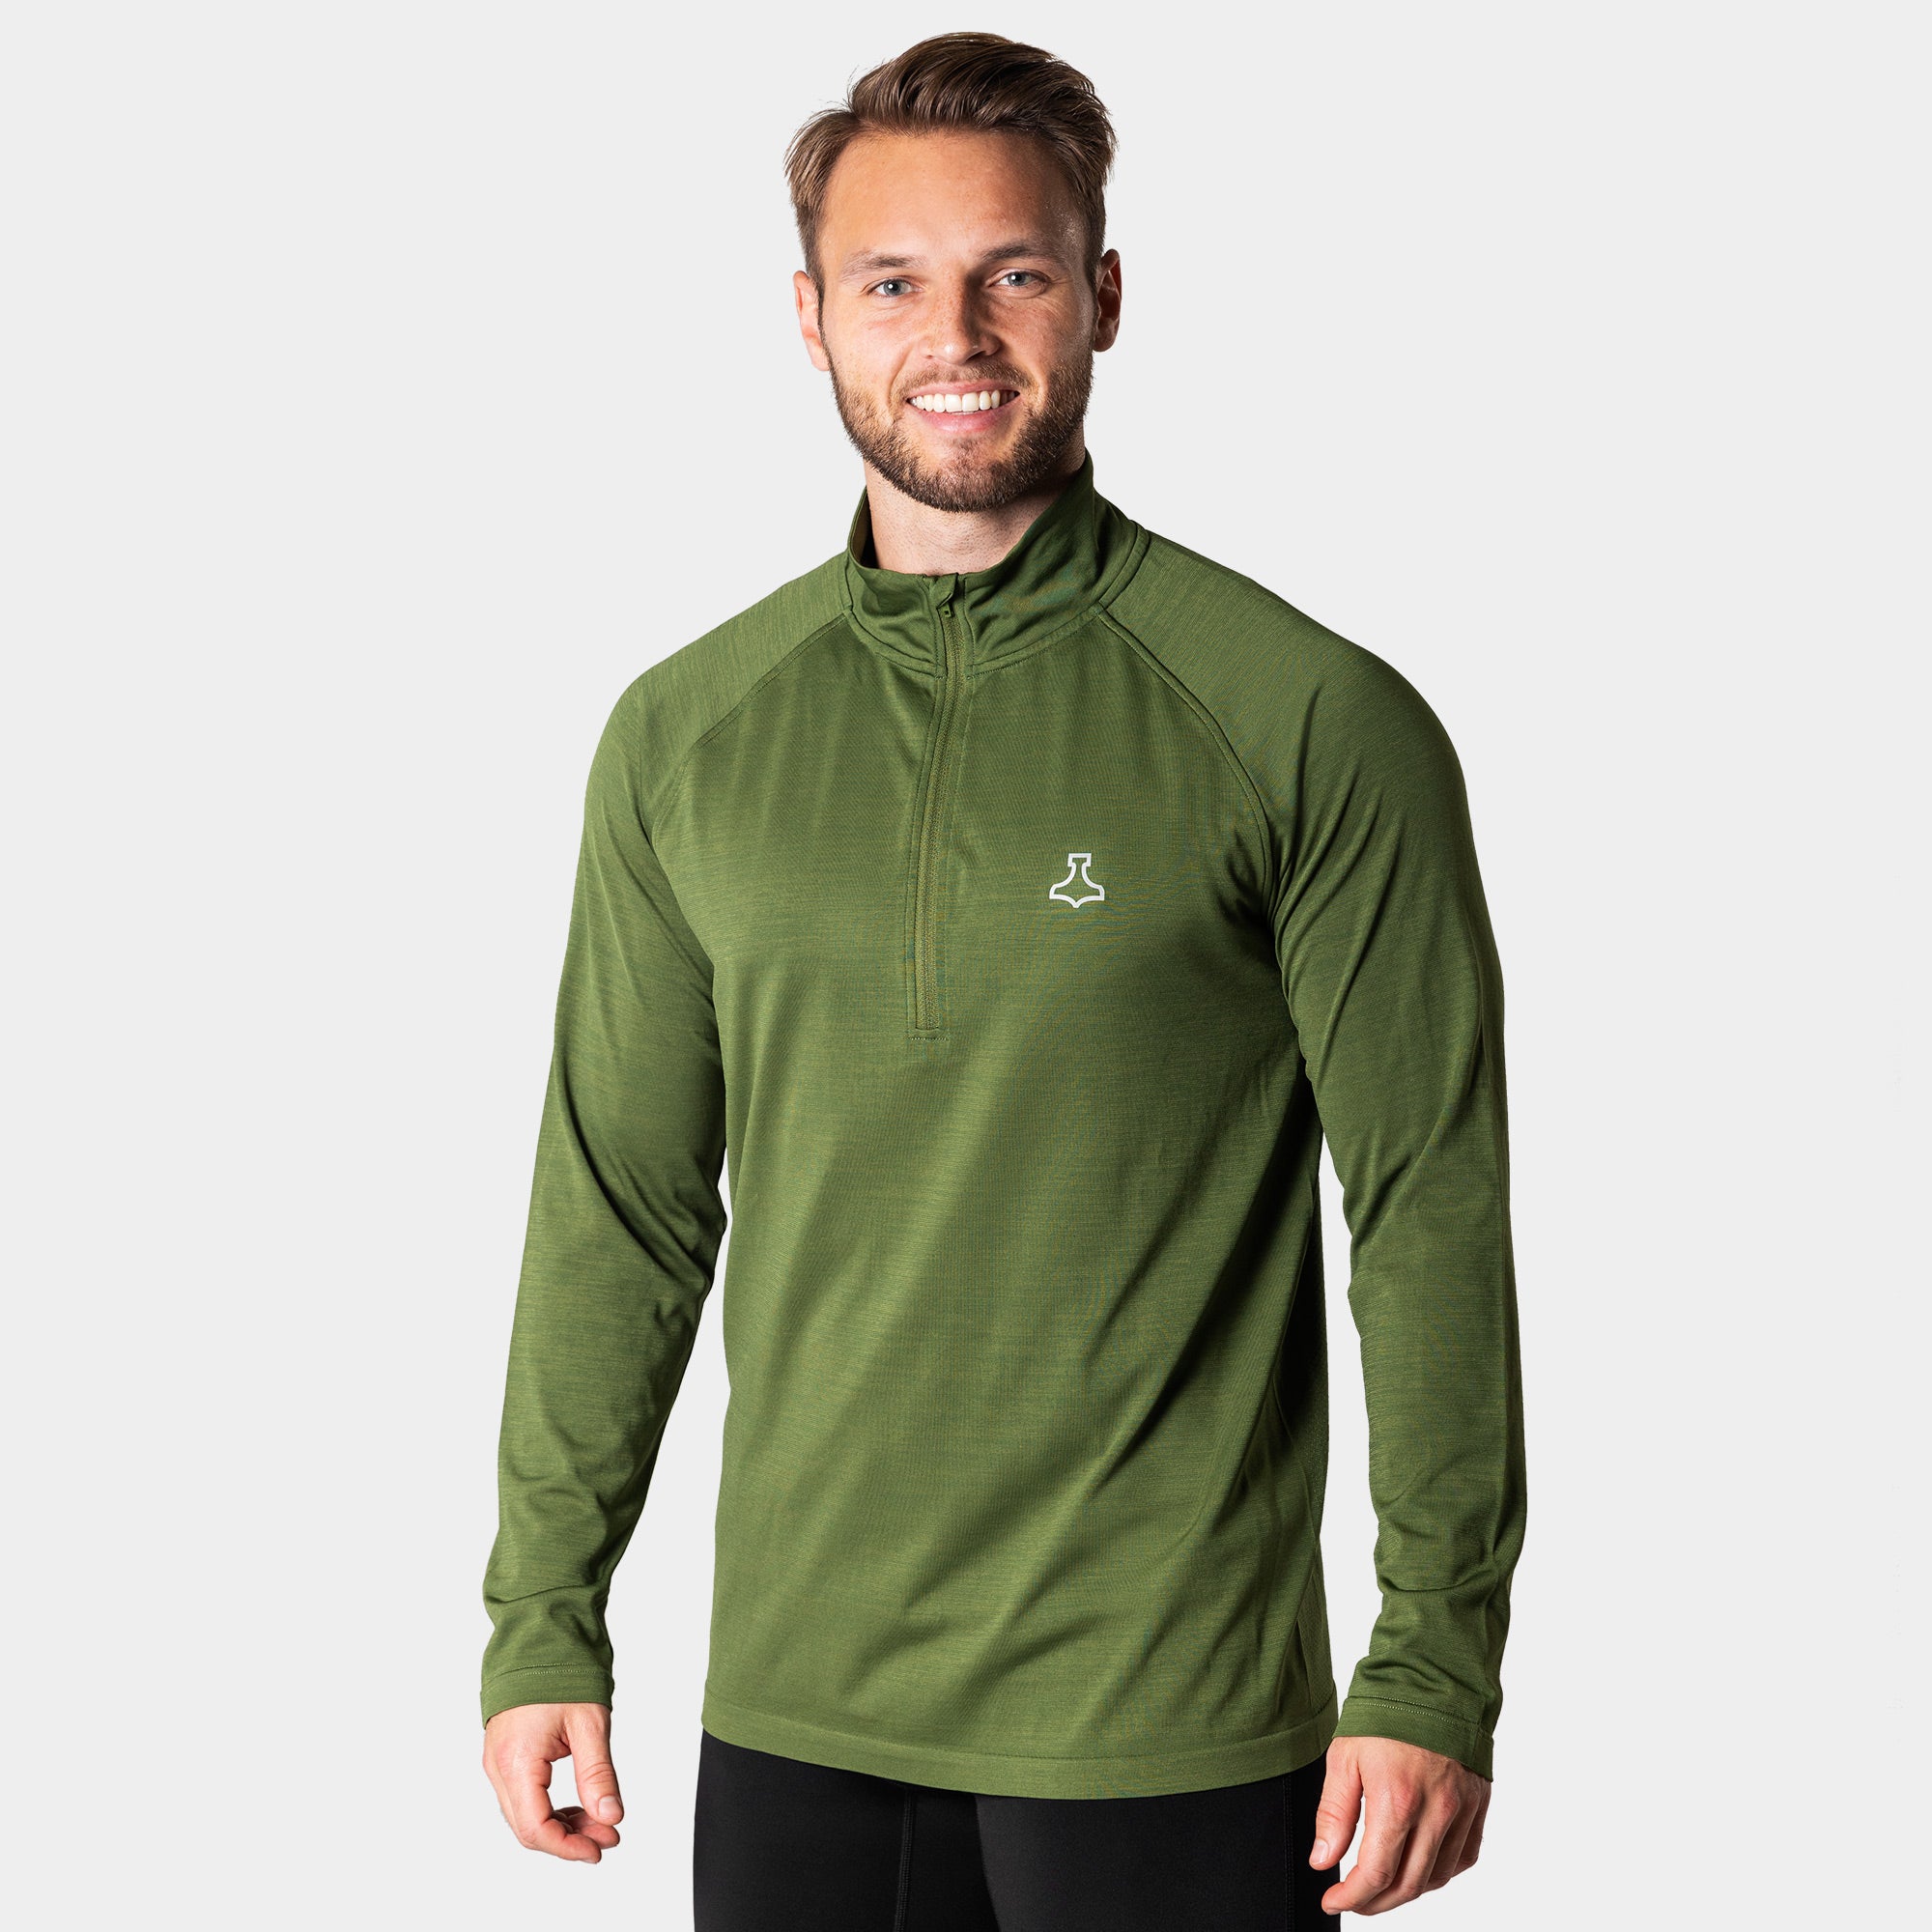 Se liiteGuard Zip-trøje | Grøn | Str. S | Mænd hos liiteGuard